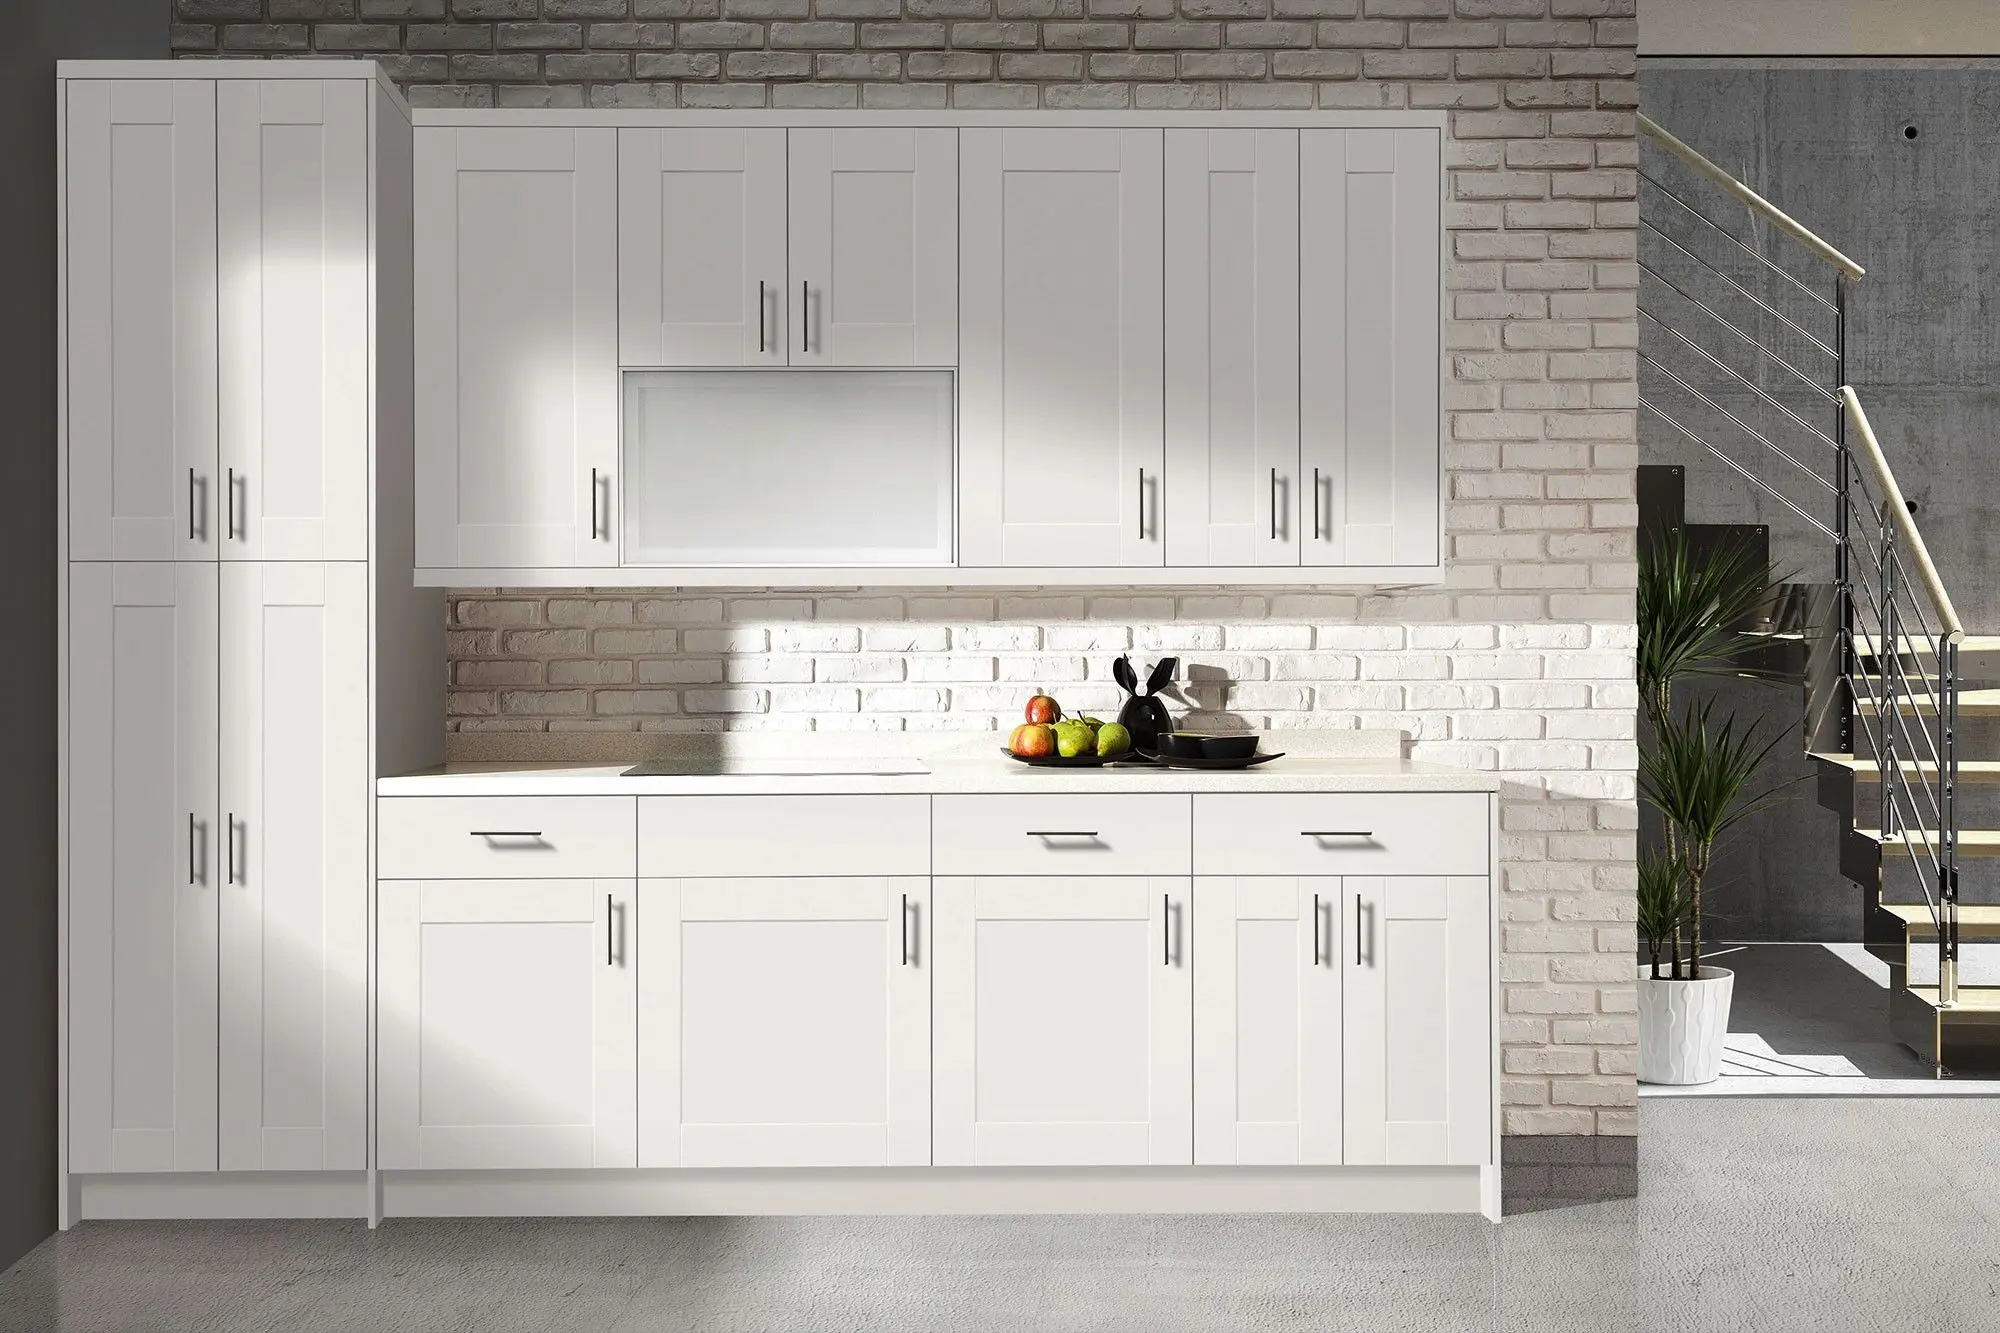 Wholesale Shaker Style White Kitchen Cabinet Door Buy Kitchen